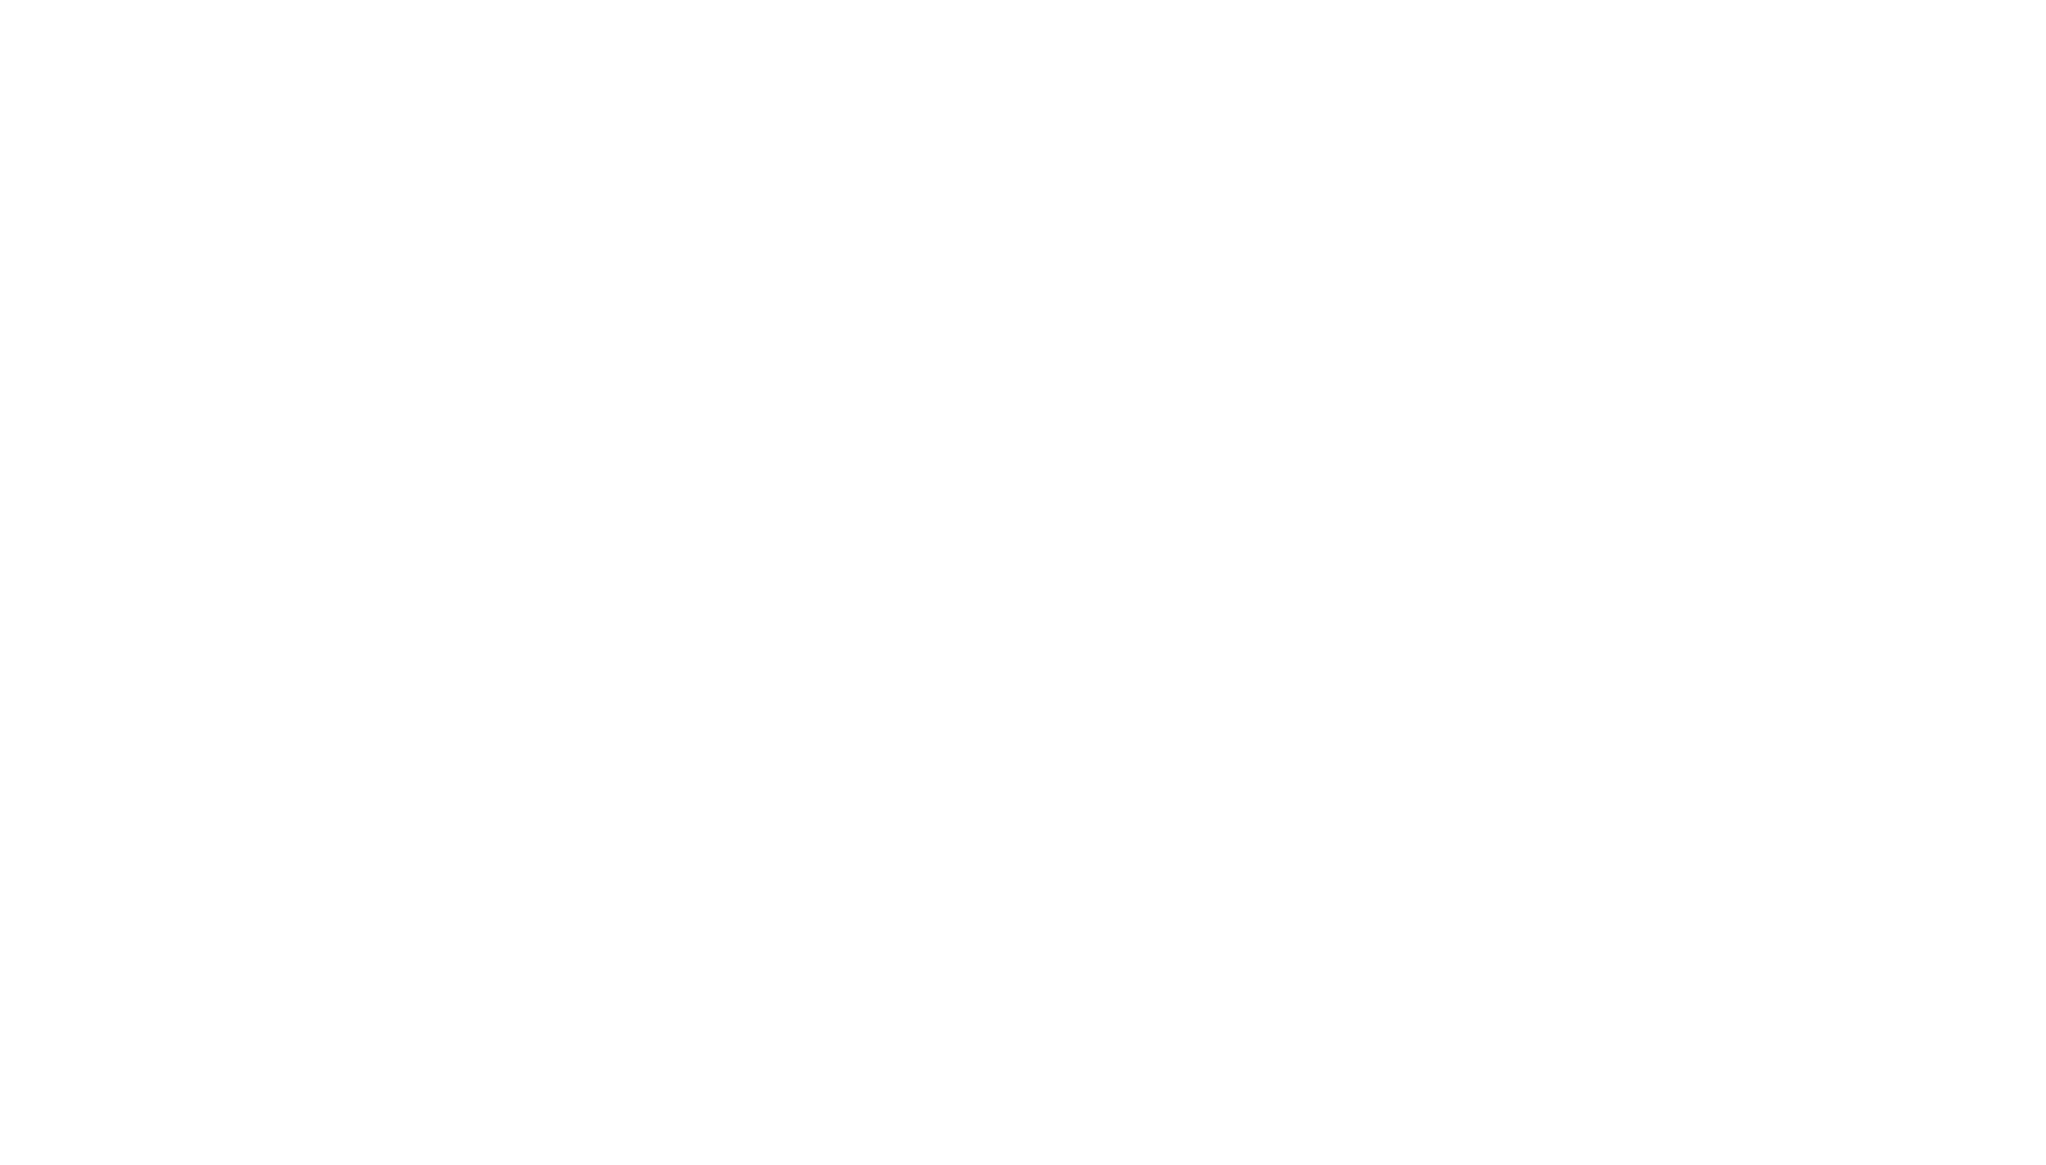 hill-chart-1